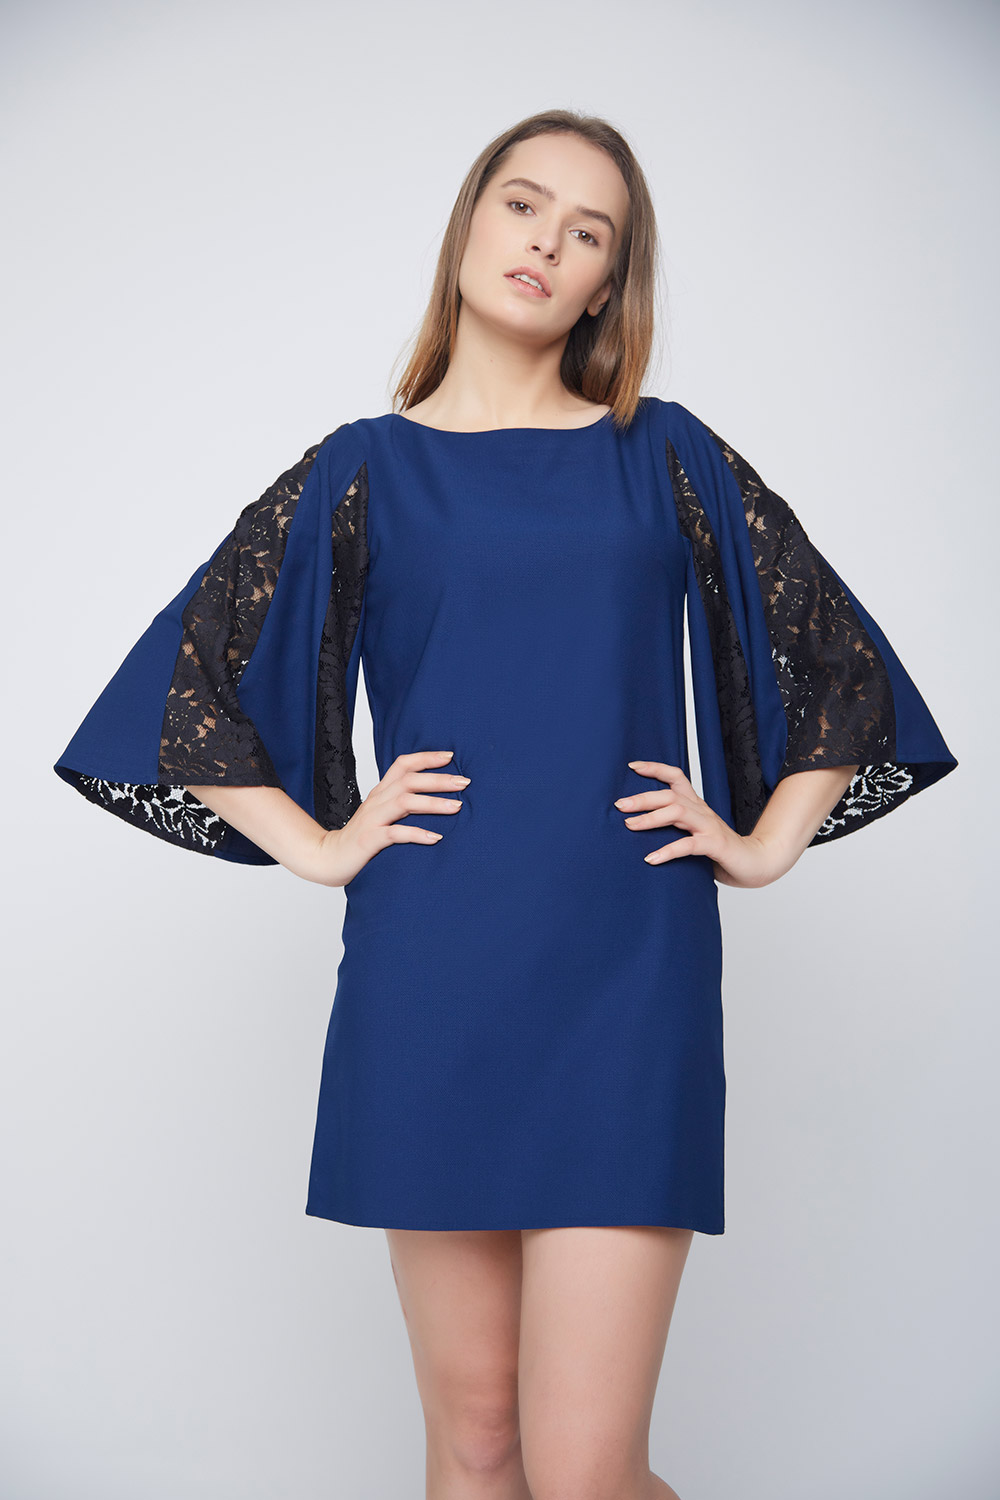 Blue Dress Black Net Pannel Sleeves -1